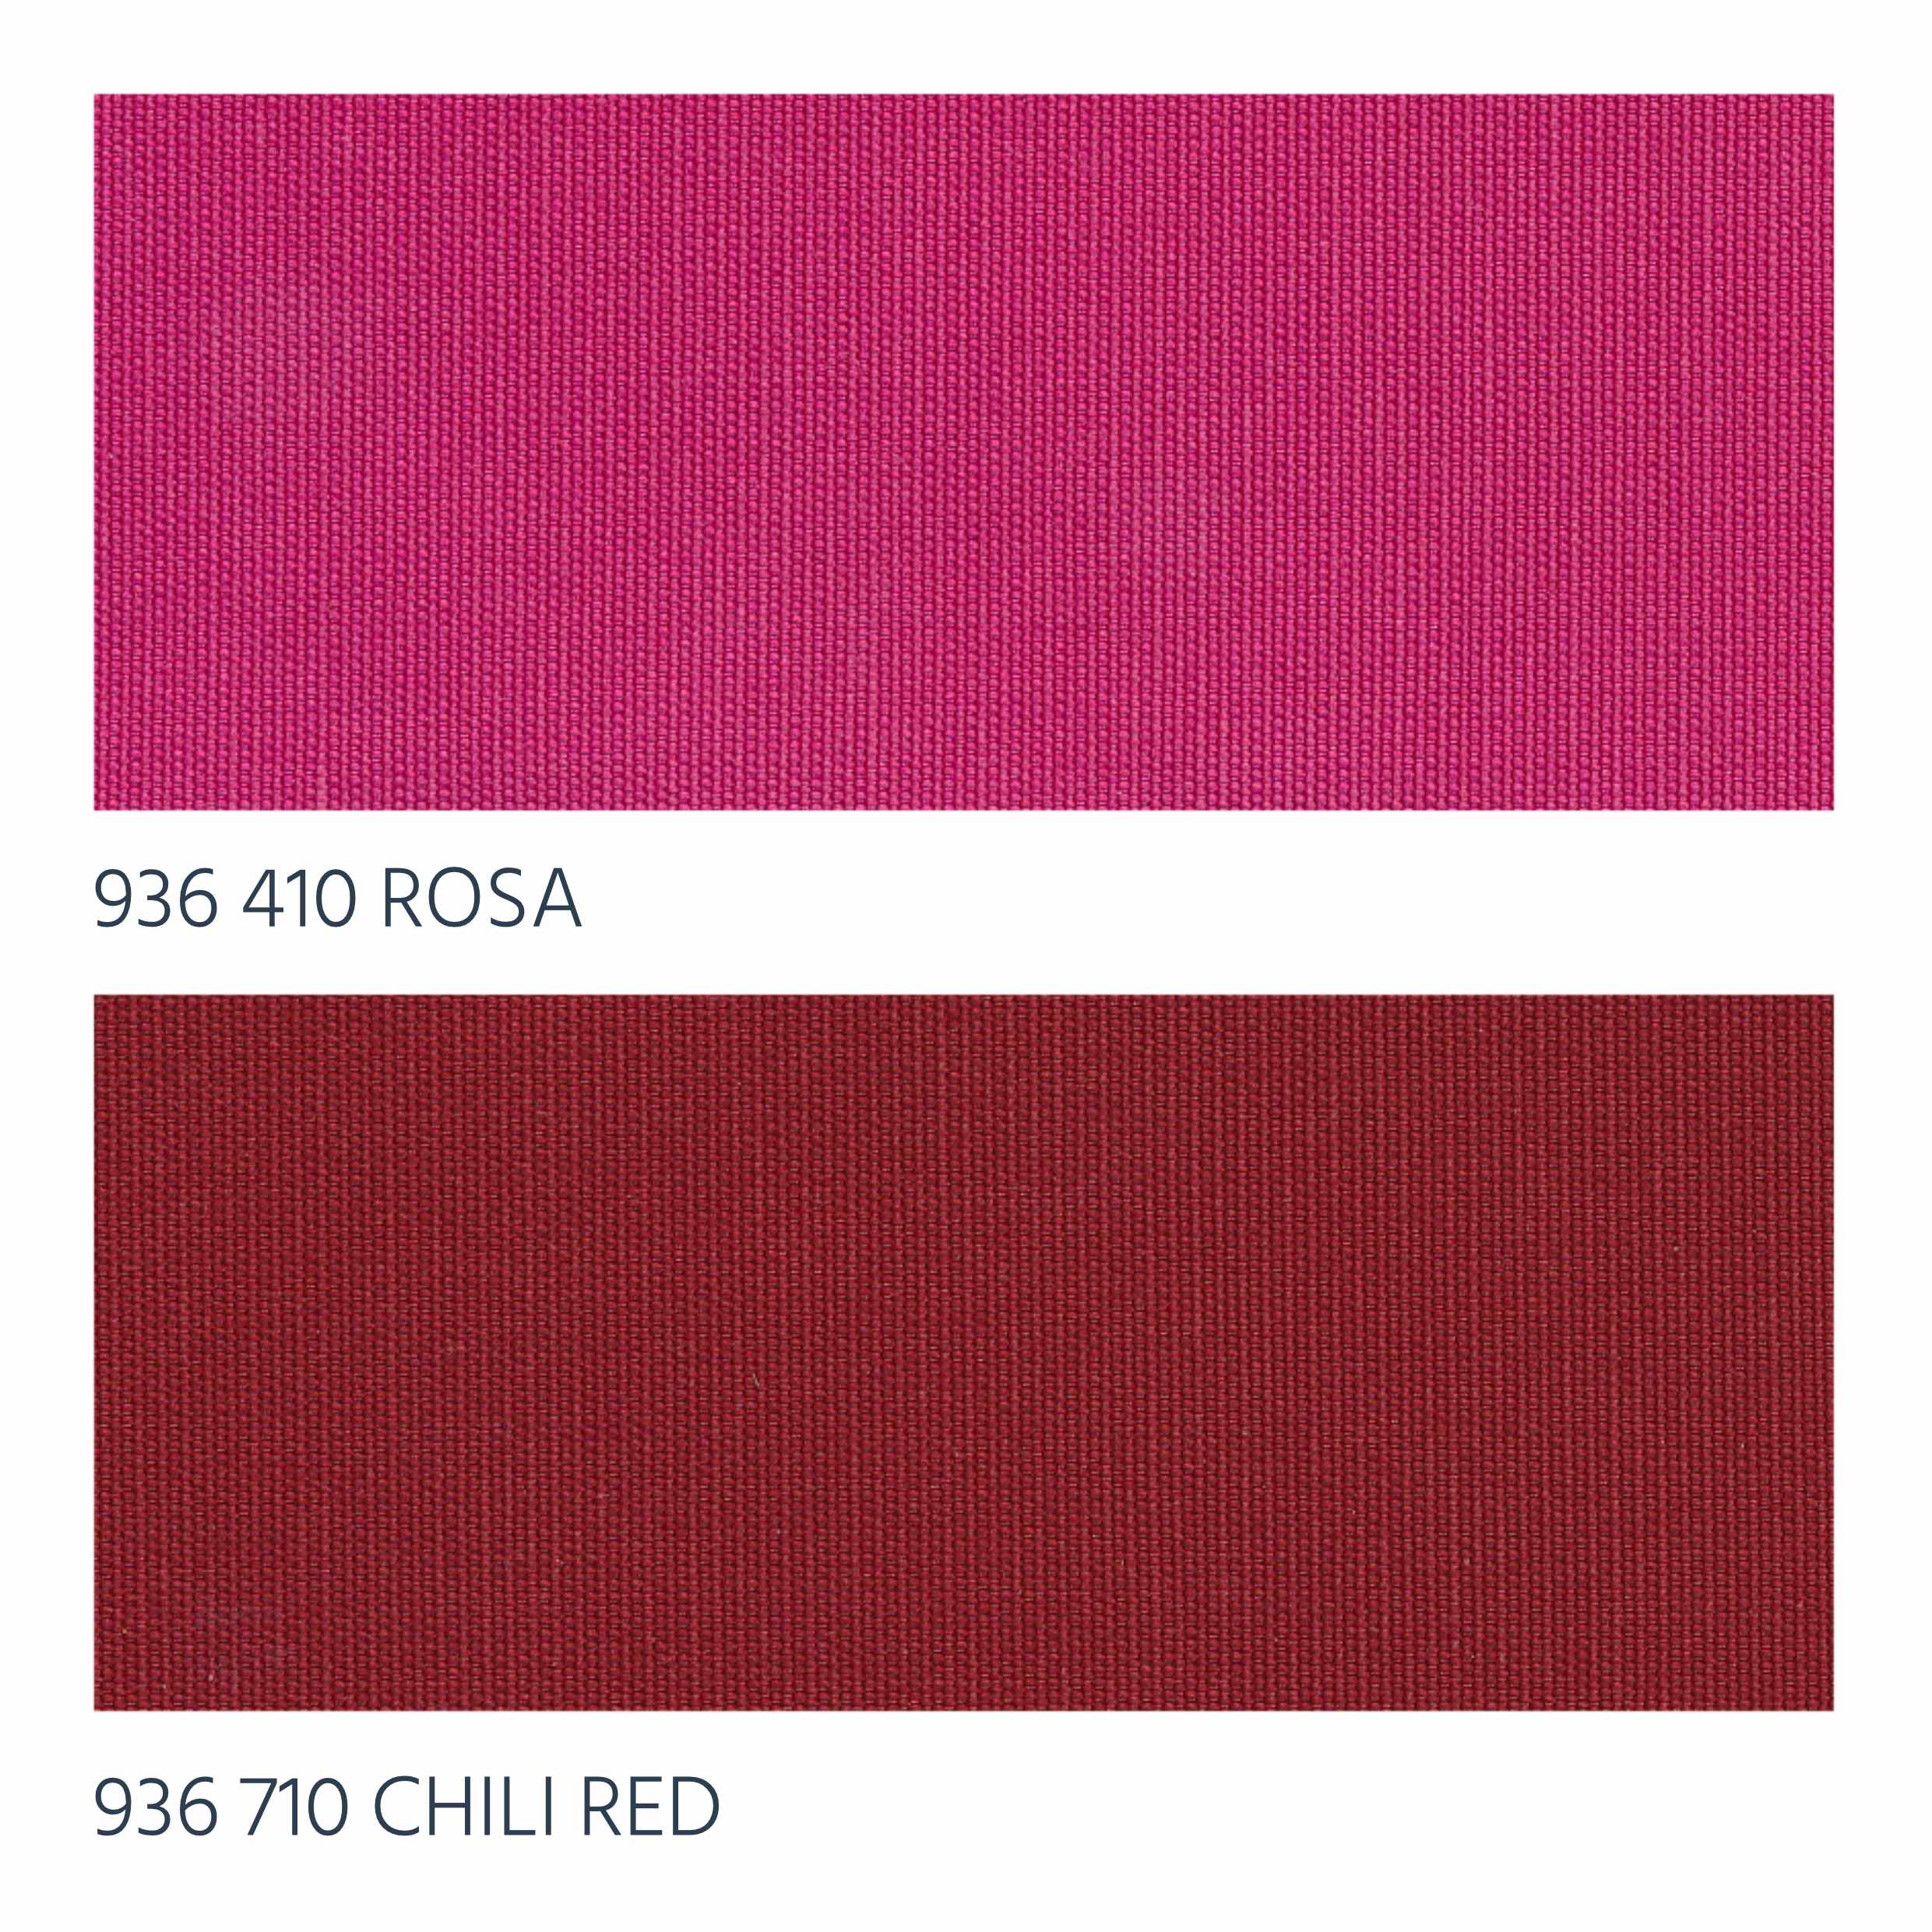 Rosa & Chili Red